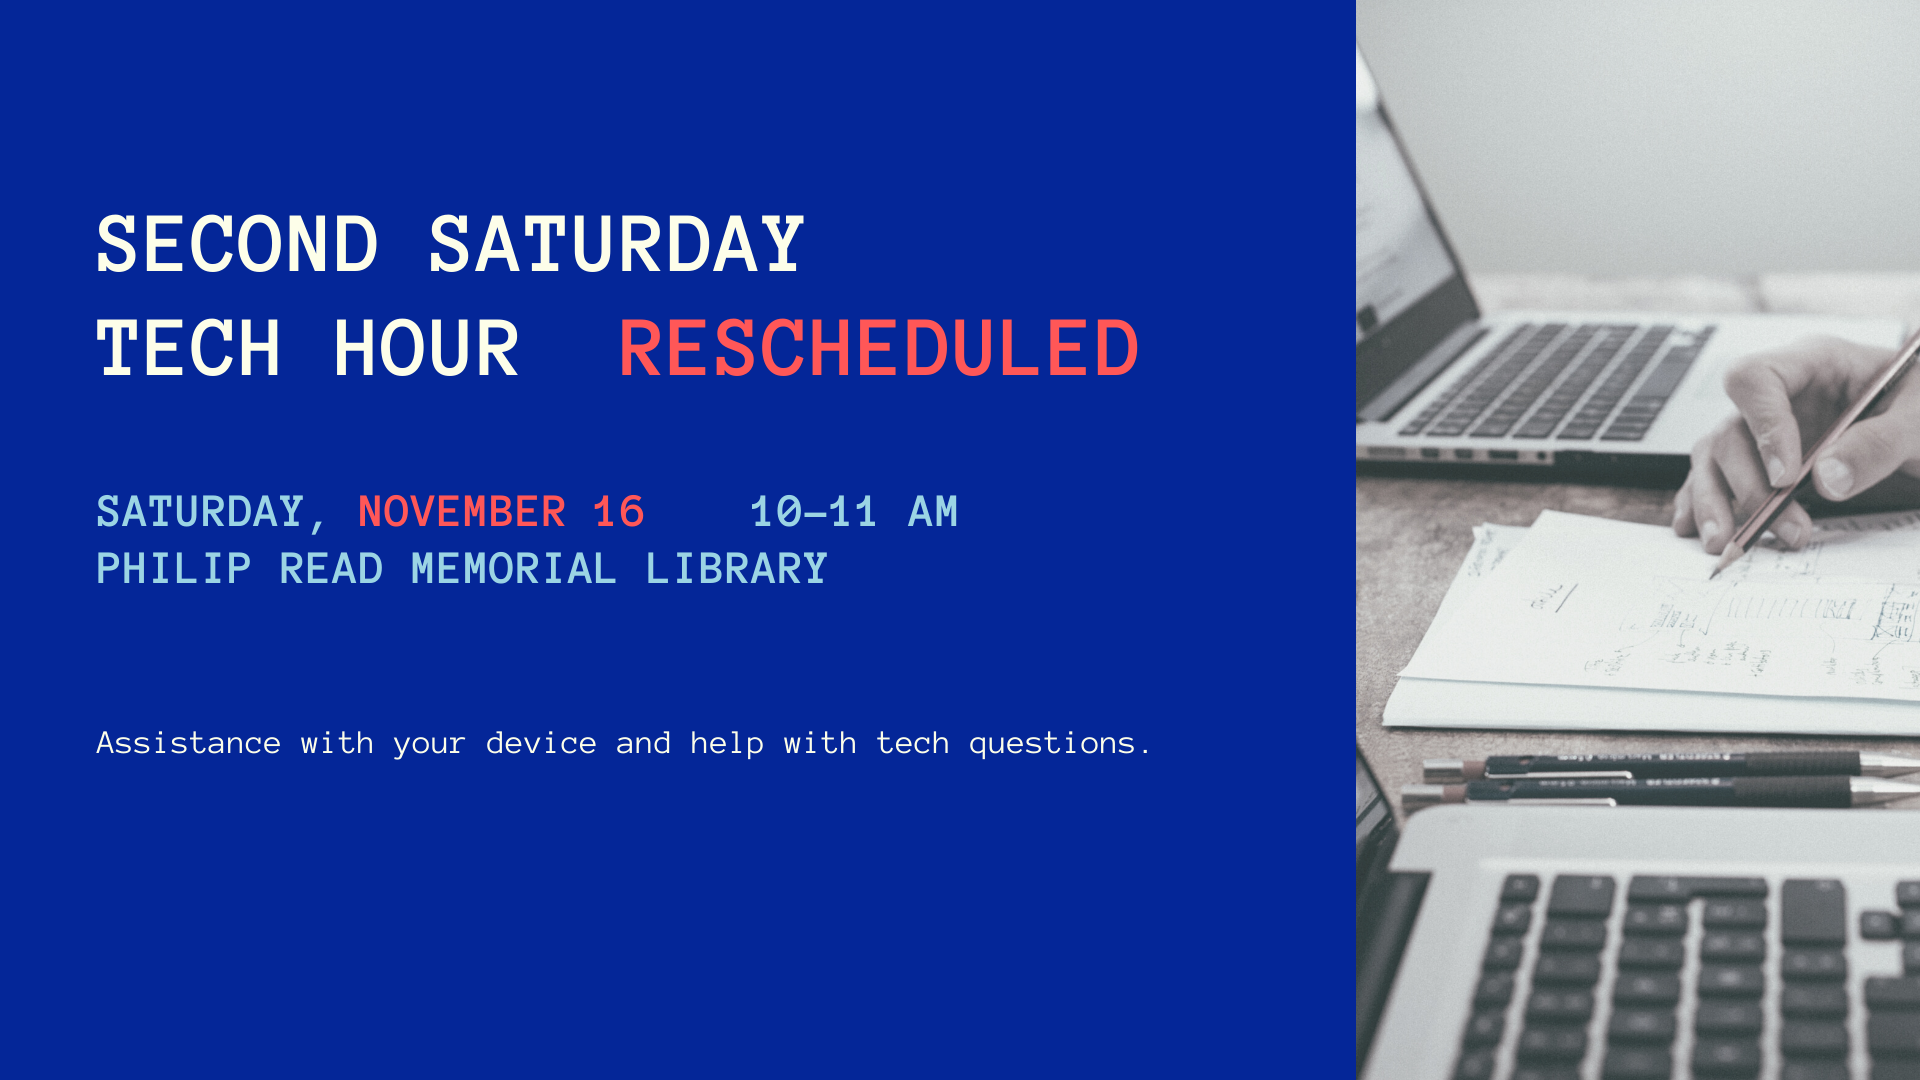 Second saturday tech hour rescheduled for november sixteen